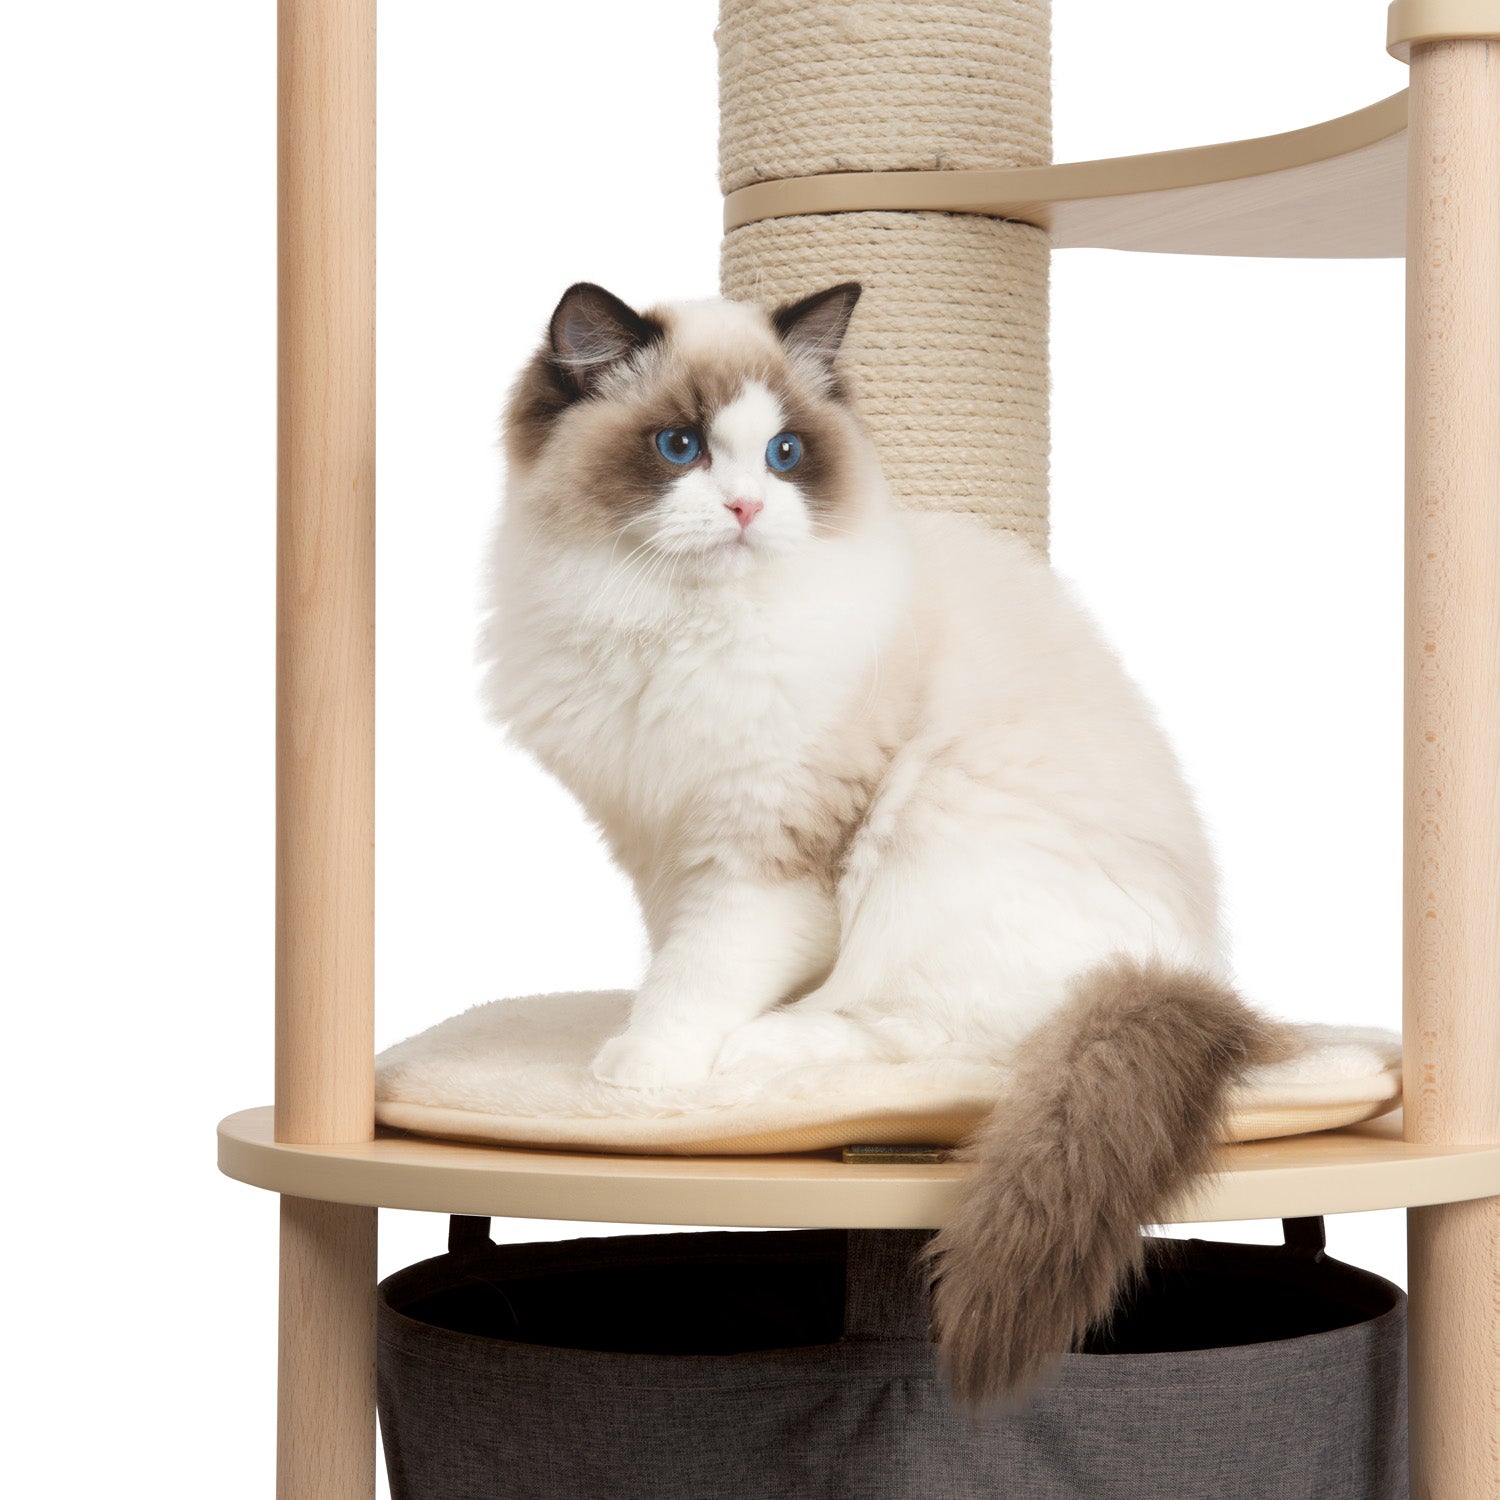 Catit Cat Furniture Vesper Treehouse 4 Levels Medium